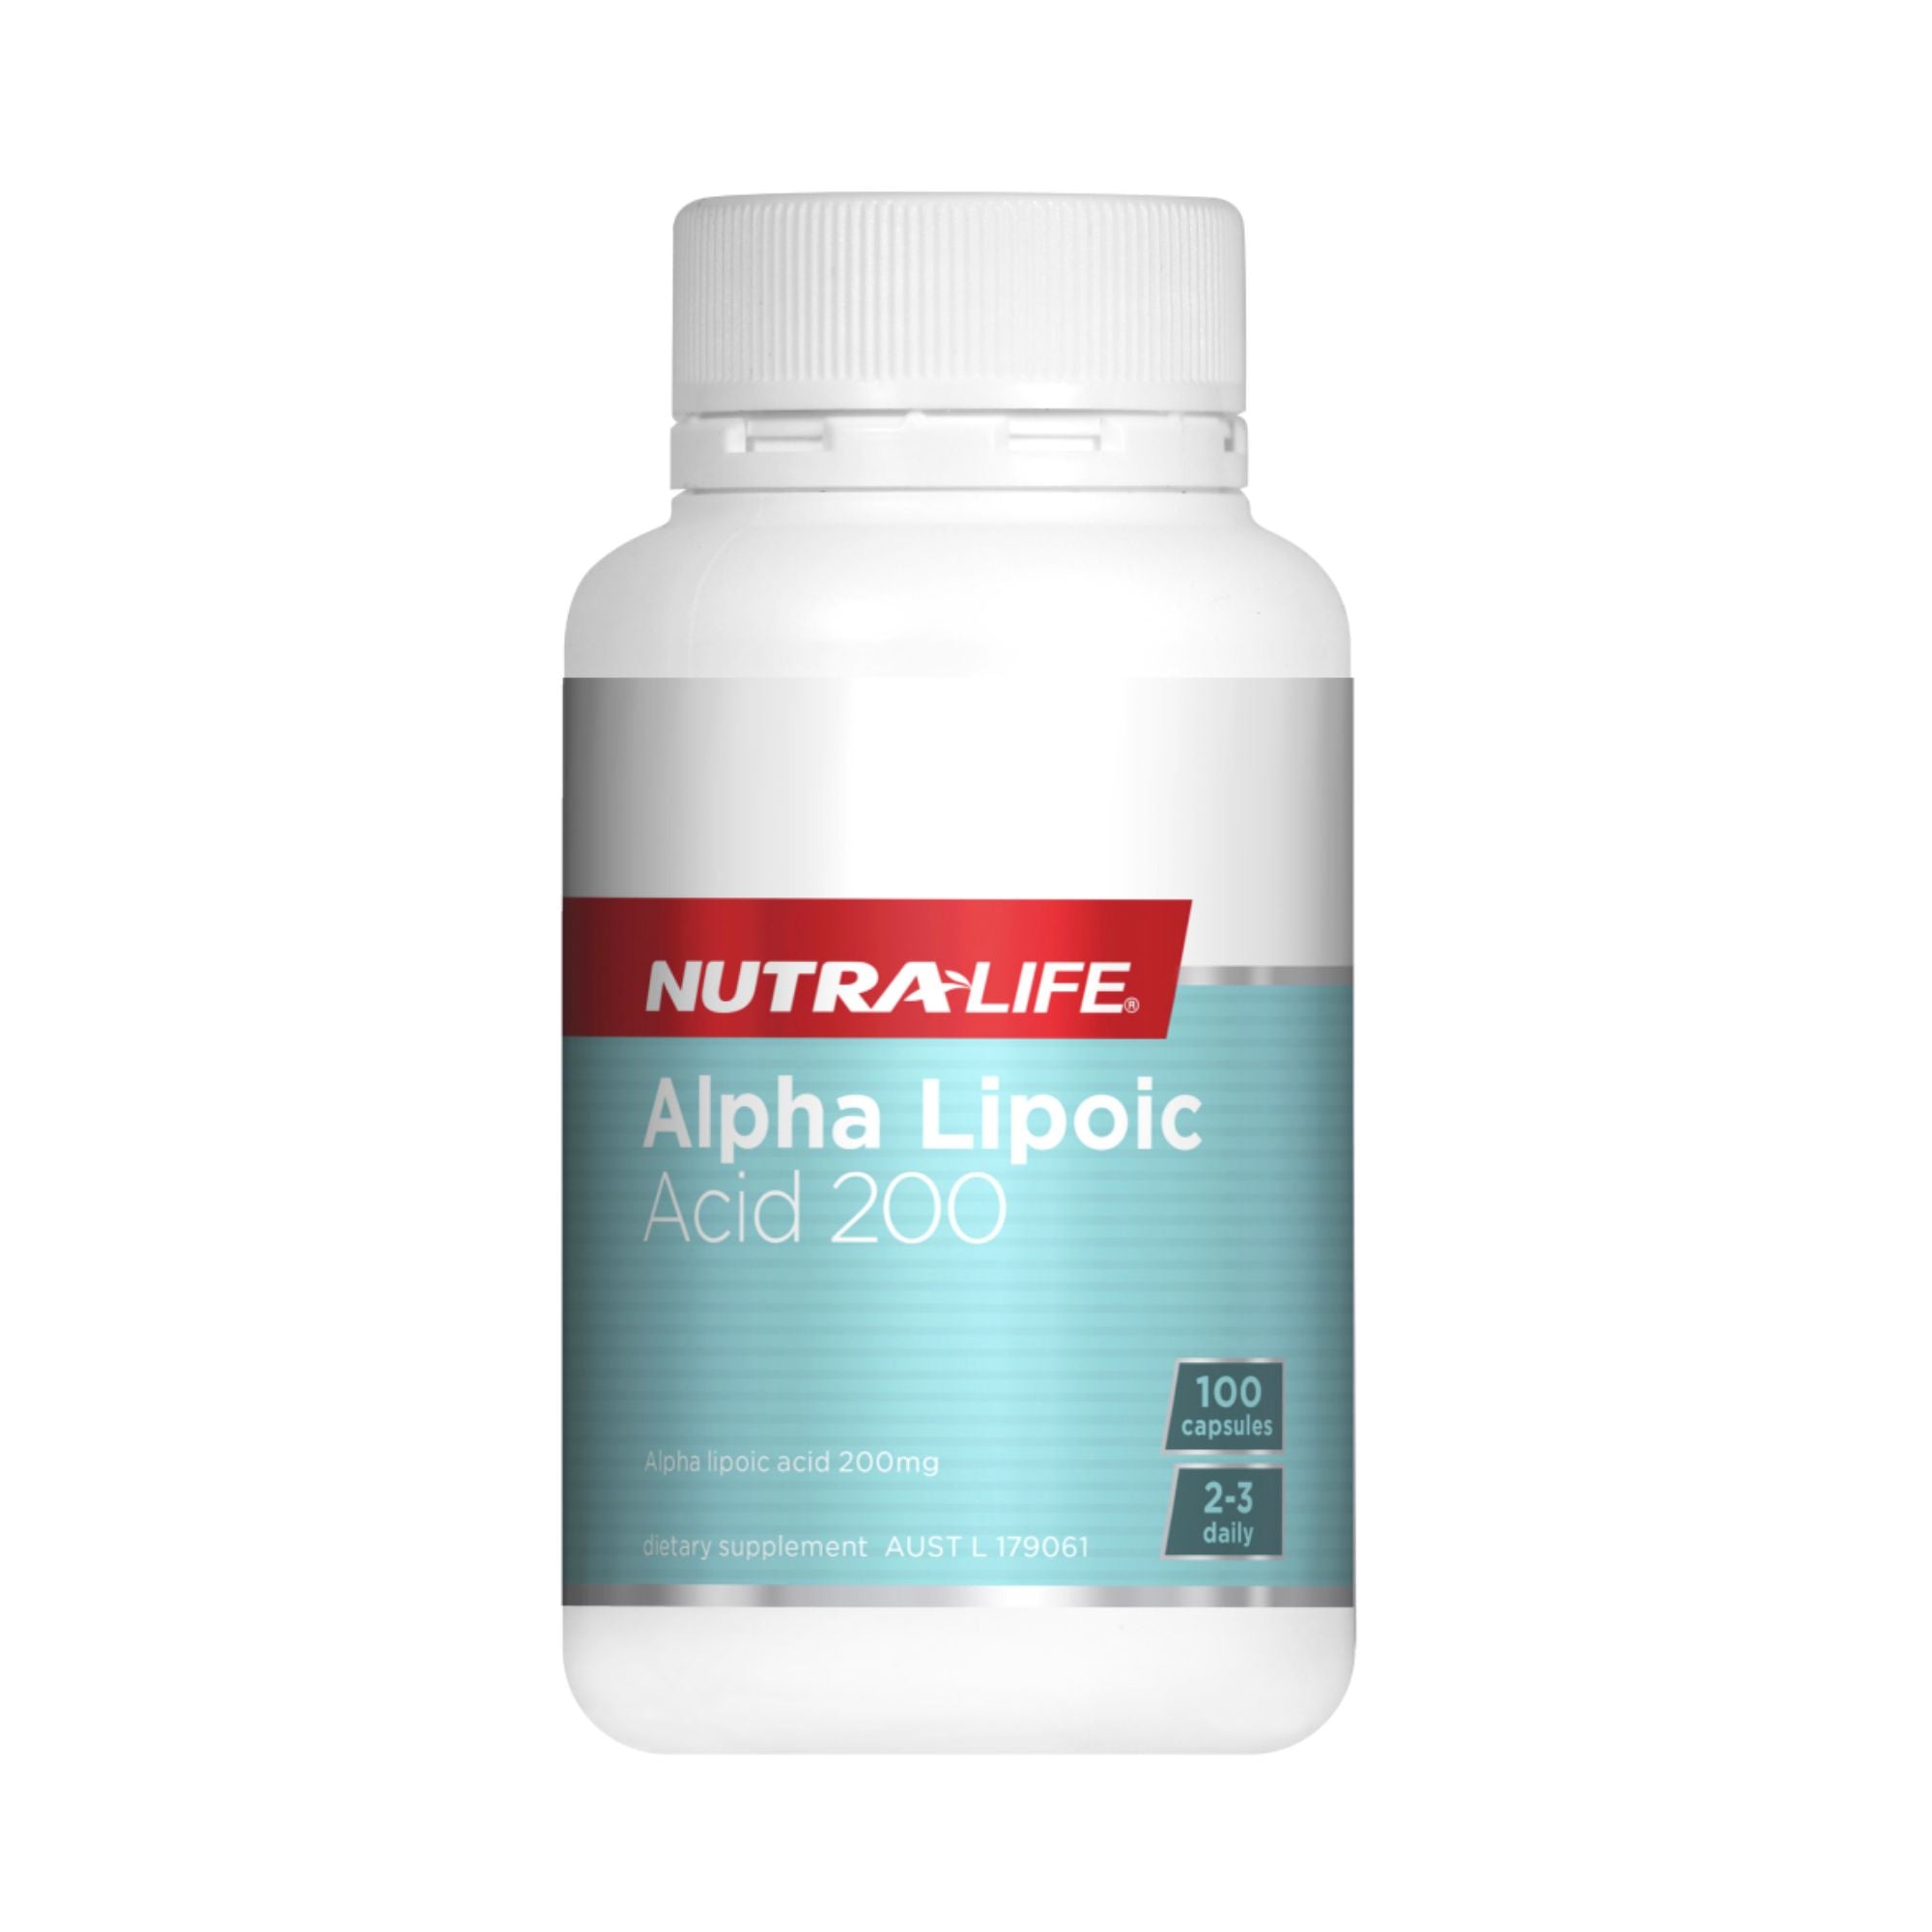 Nutra-Life Alpha Lipoic Acid 200